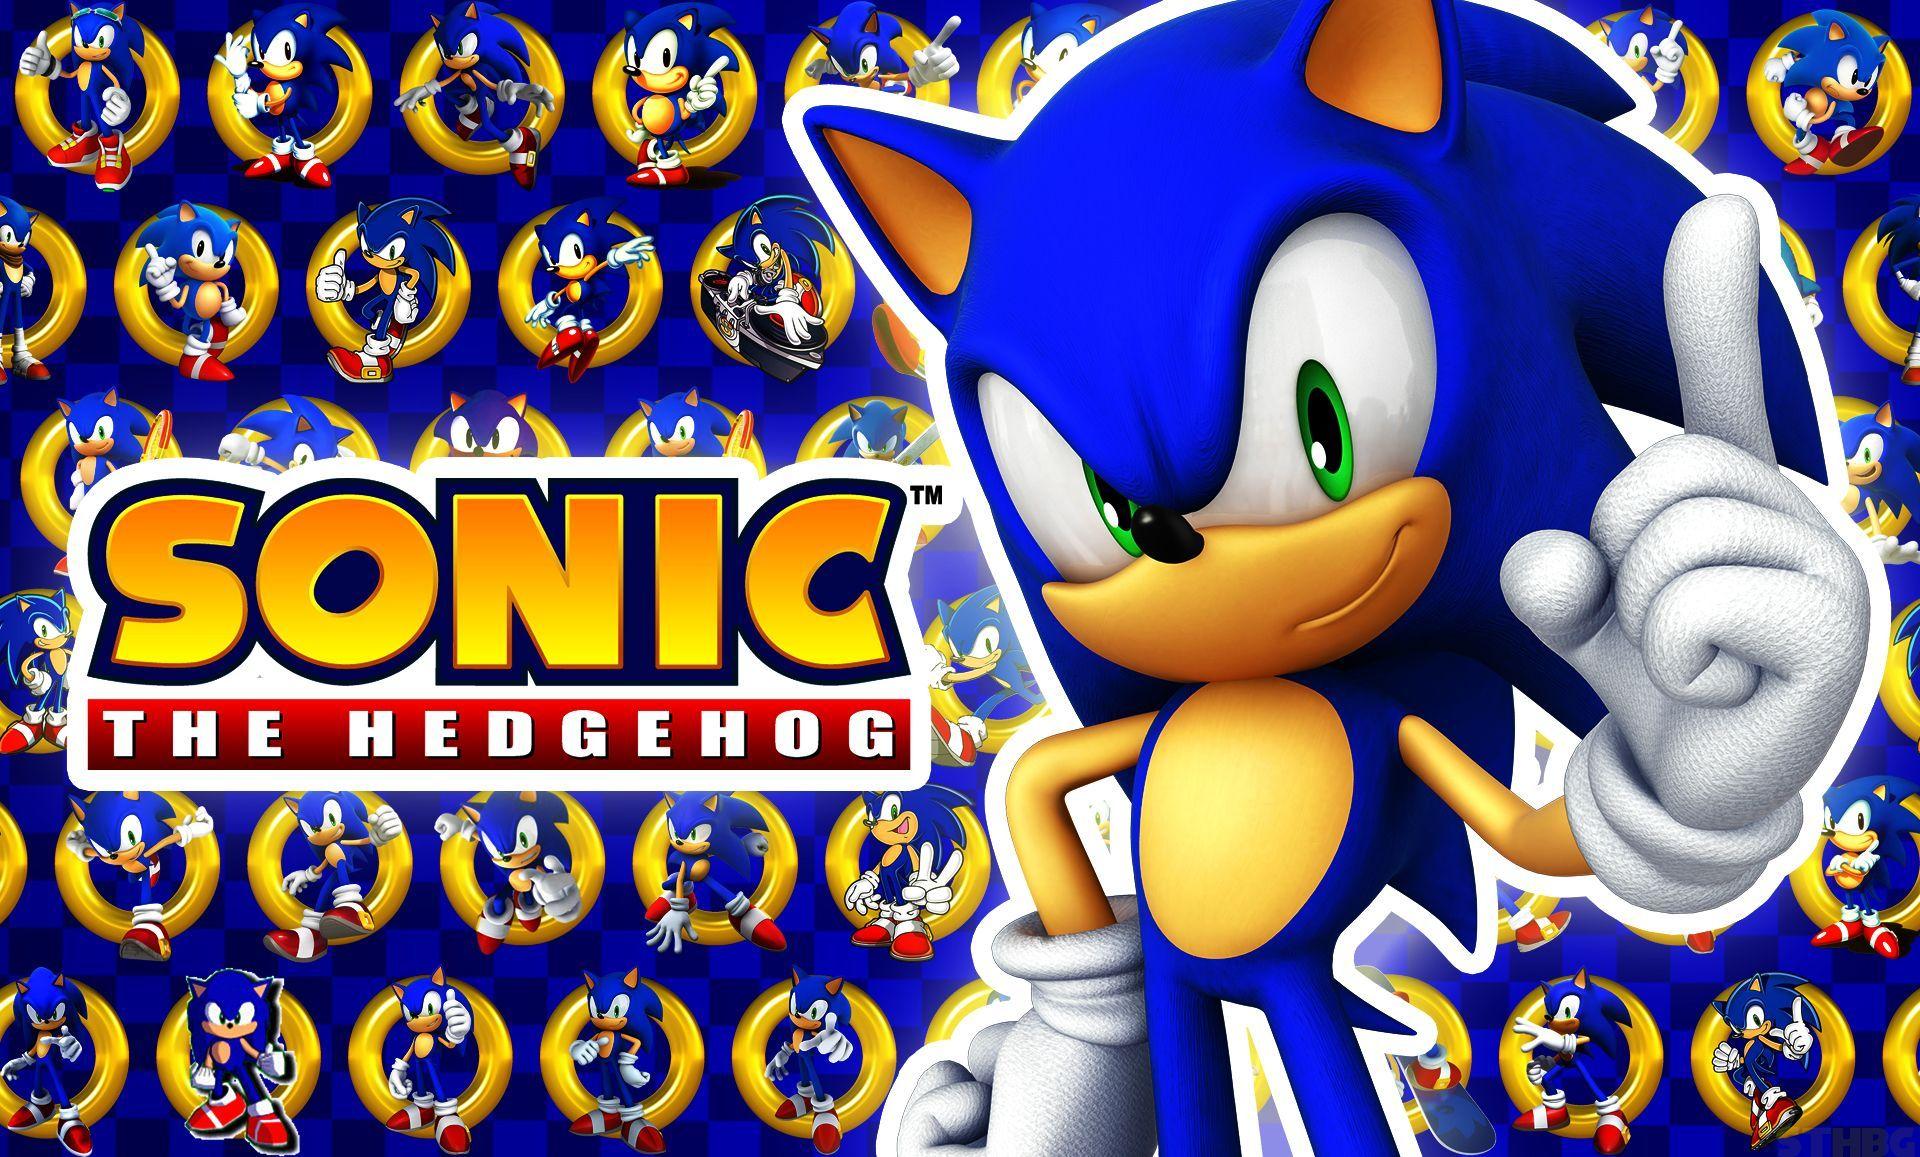 Sonic The Hedgehog HD Wallpaper. Wallpaper, Background, Image